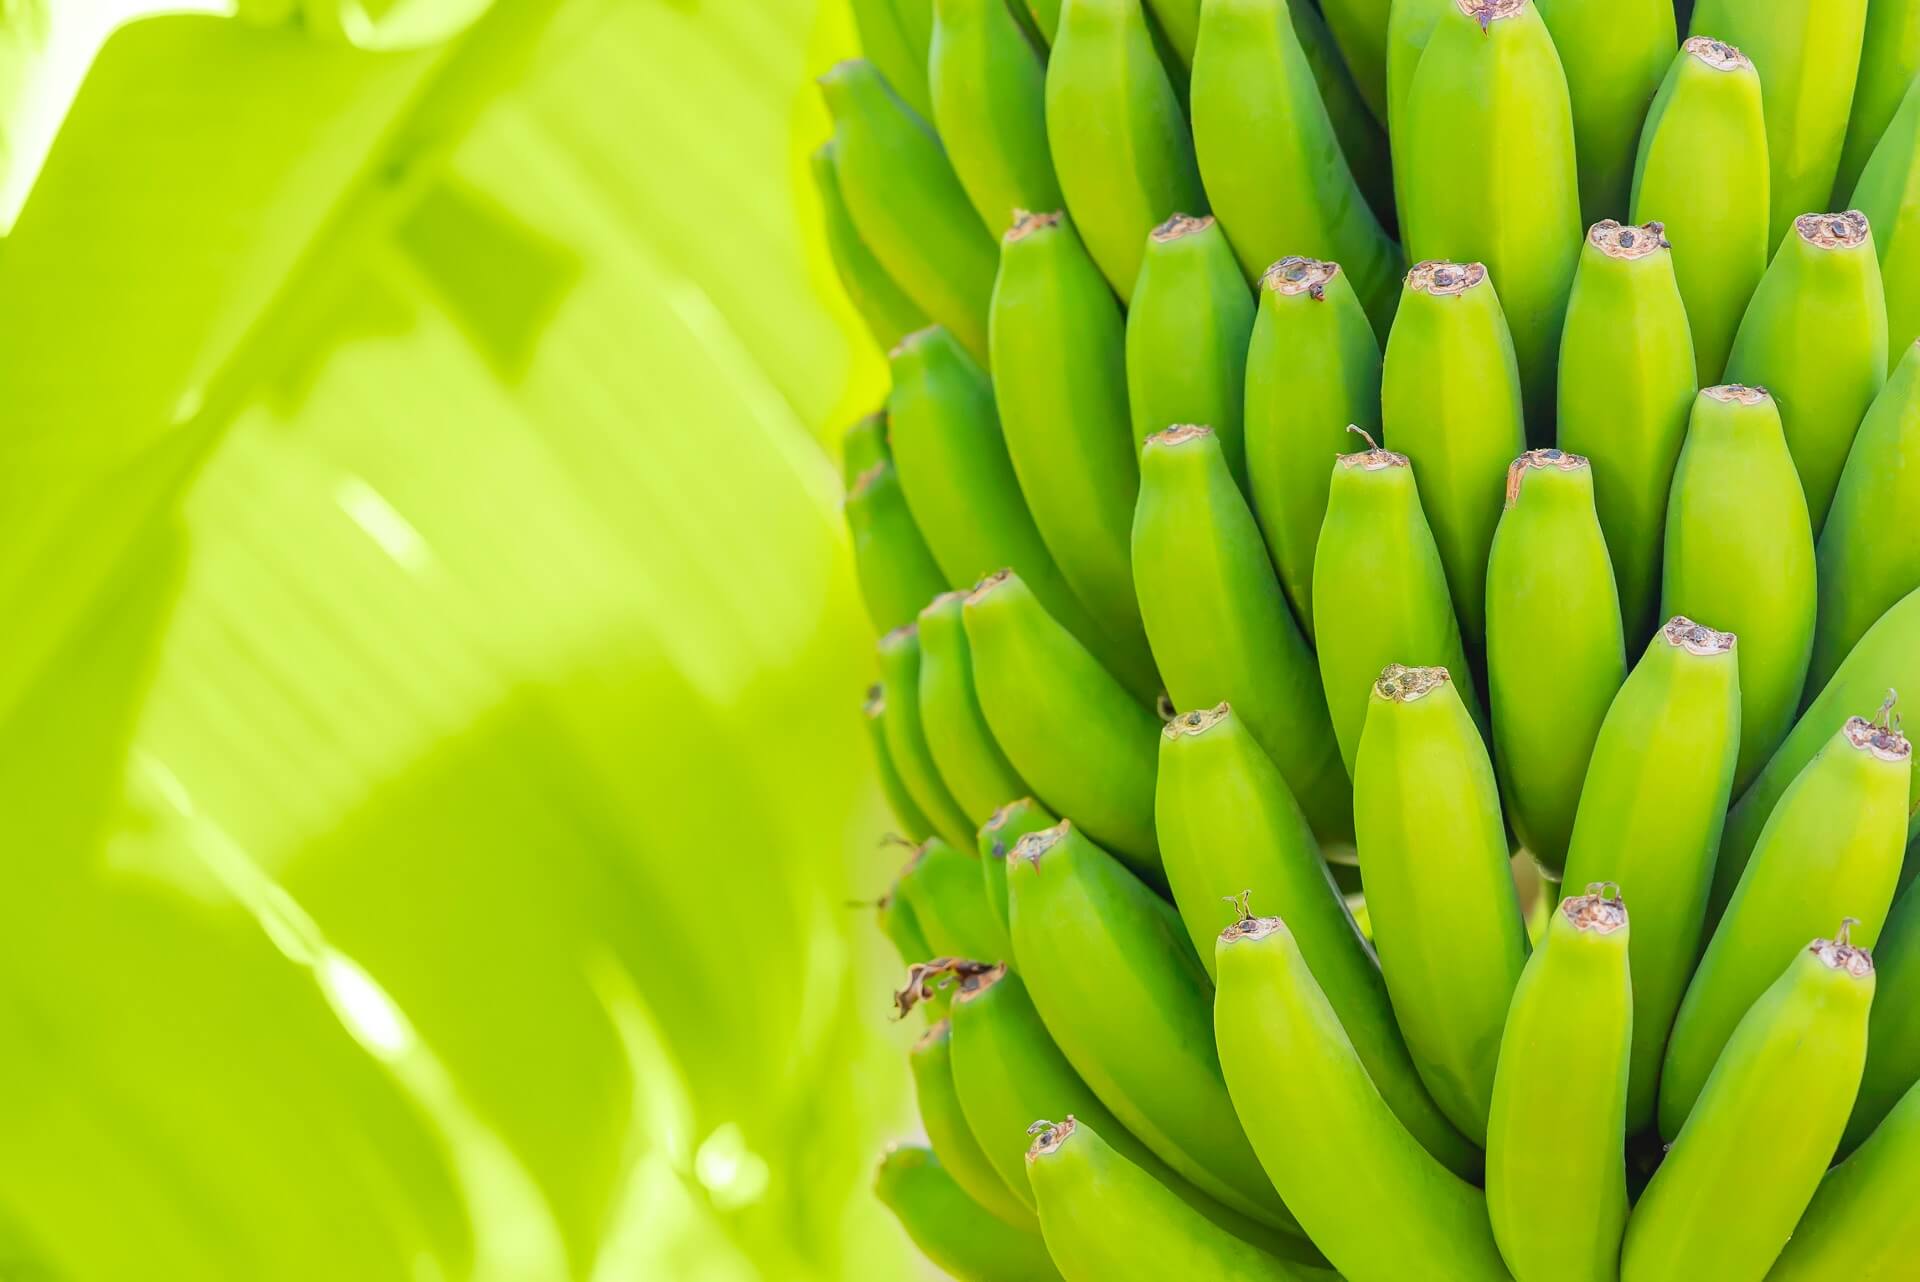 Organic bananas – are eco bananas better than regular ones?